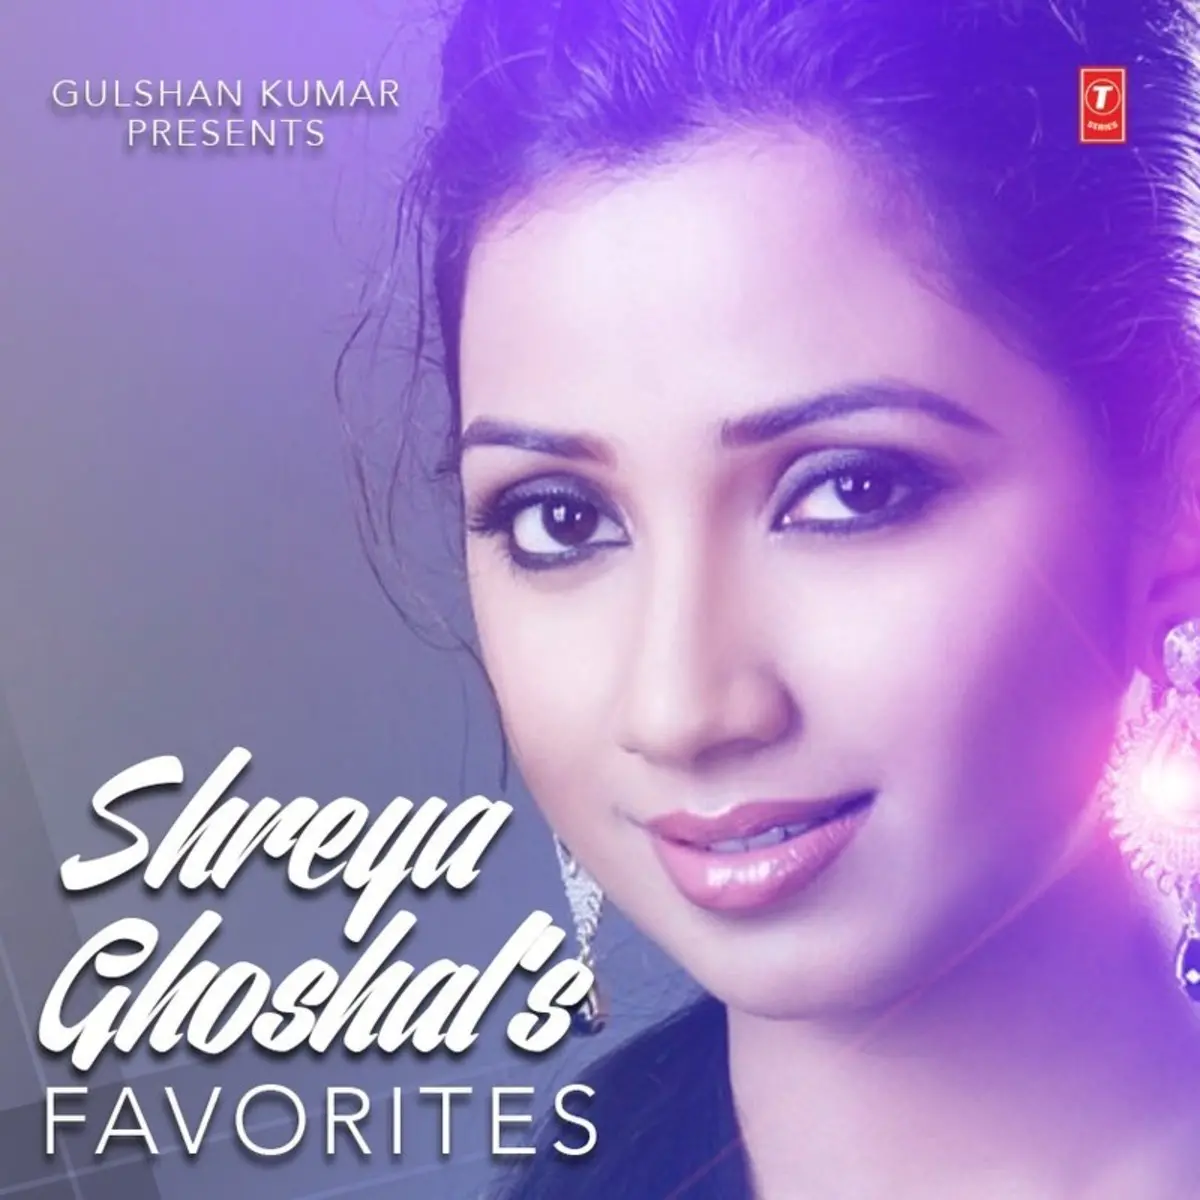 Oh My Love Lyrics In Hindi Shreya Ghoshal S Favorites Oh My Love Song Lyrics In English Free Online On Gaana Com